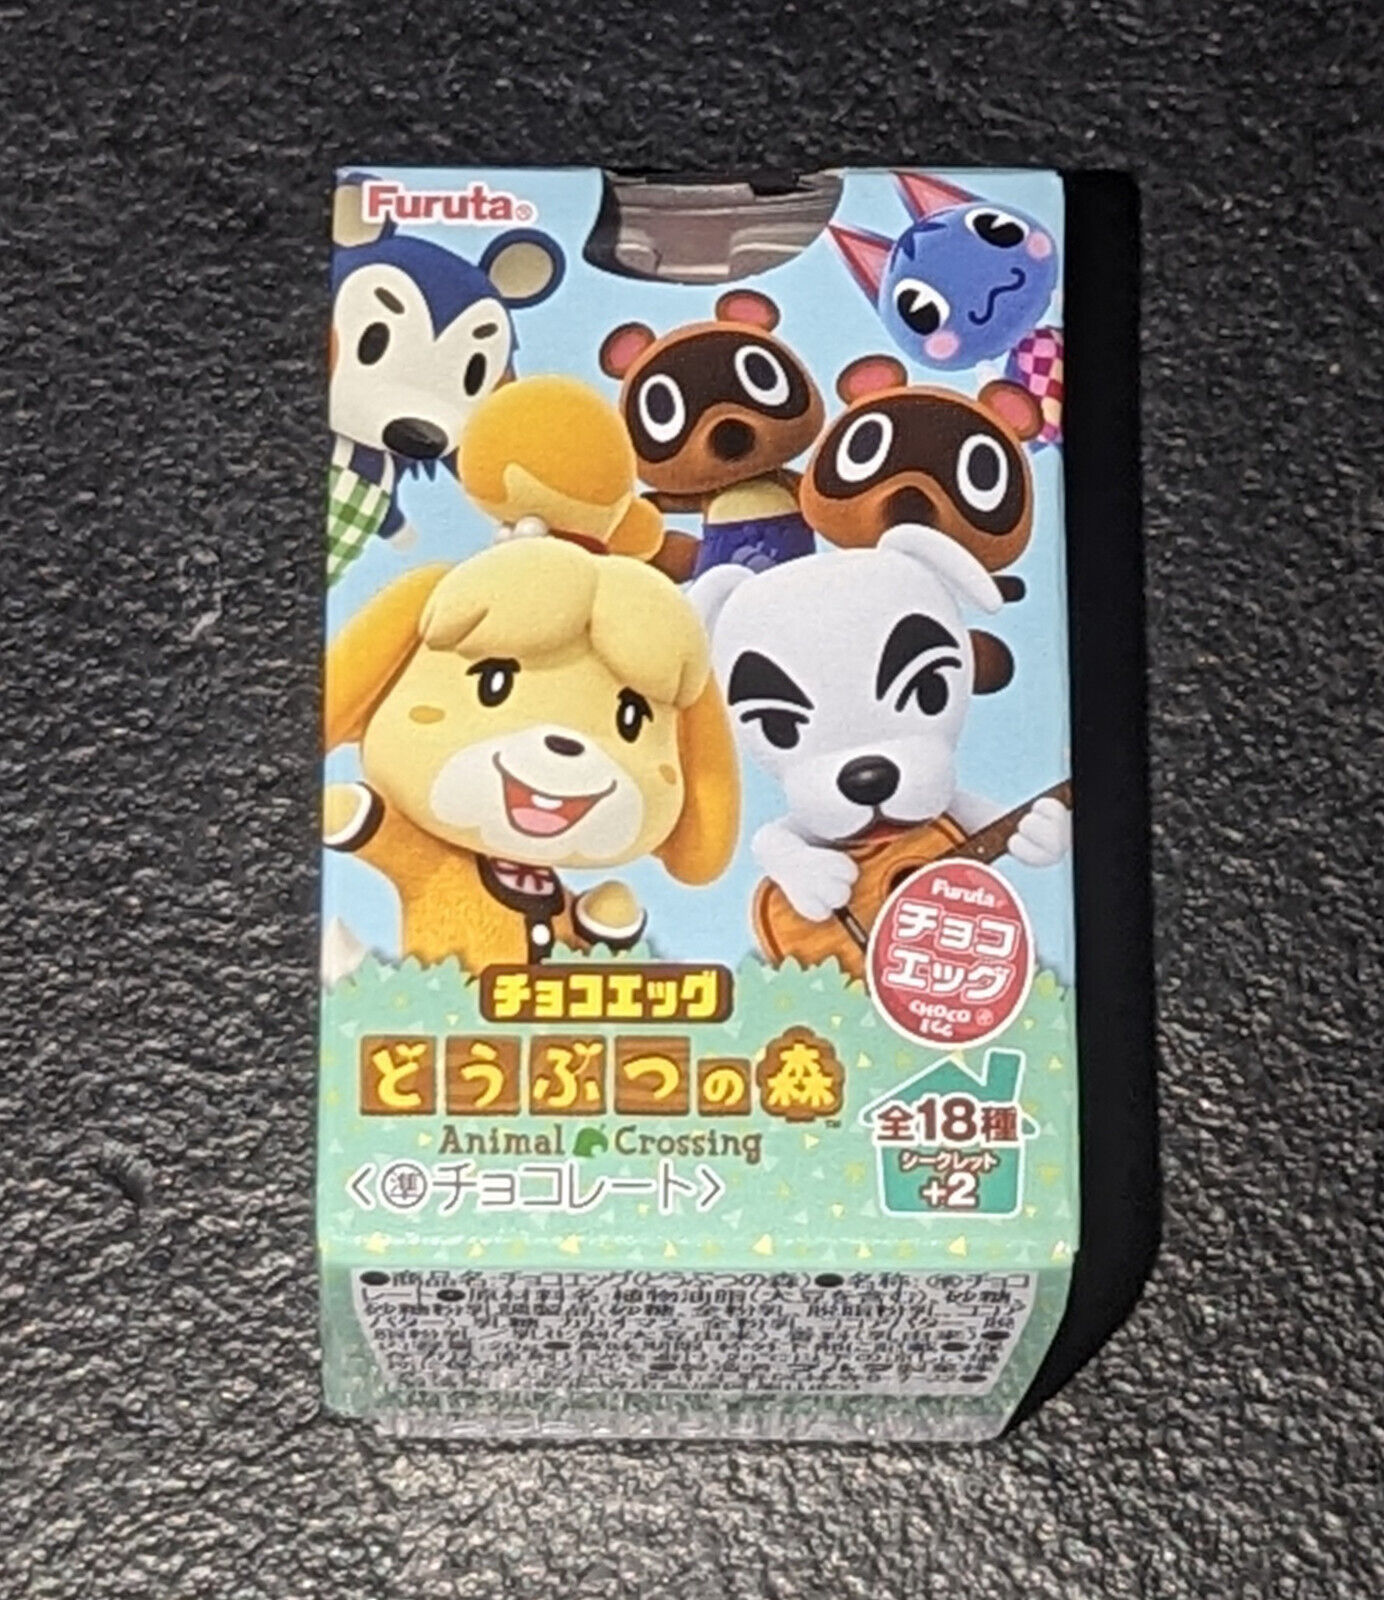 Furuta Nintendo Animal Crossing Choco Egg Blind Box Unopened